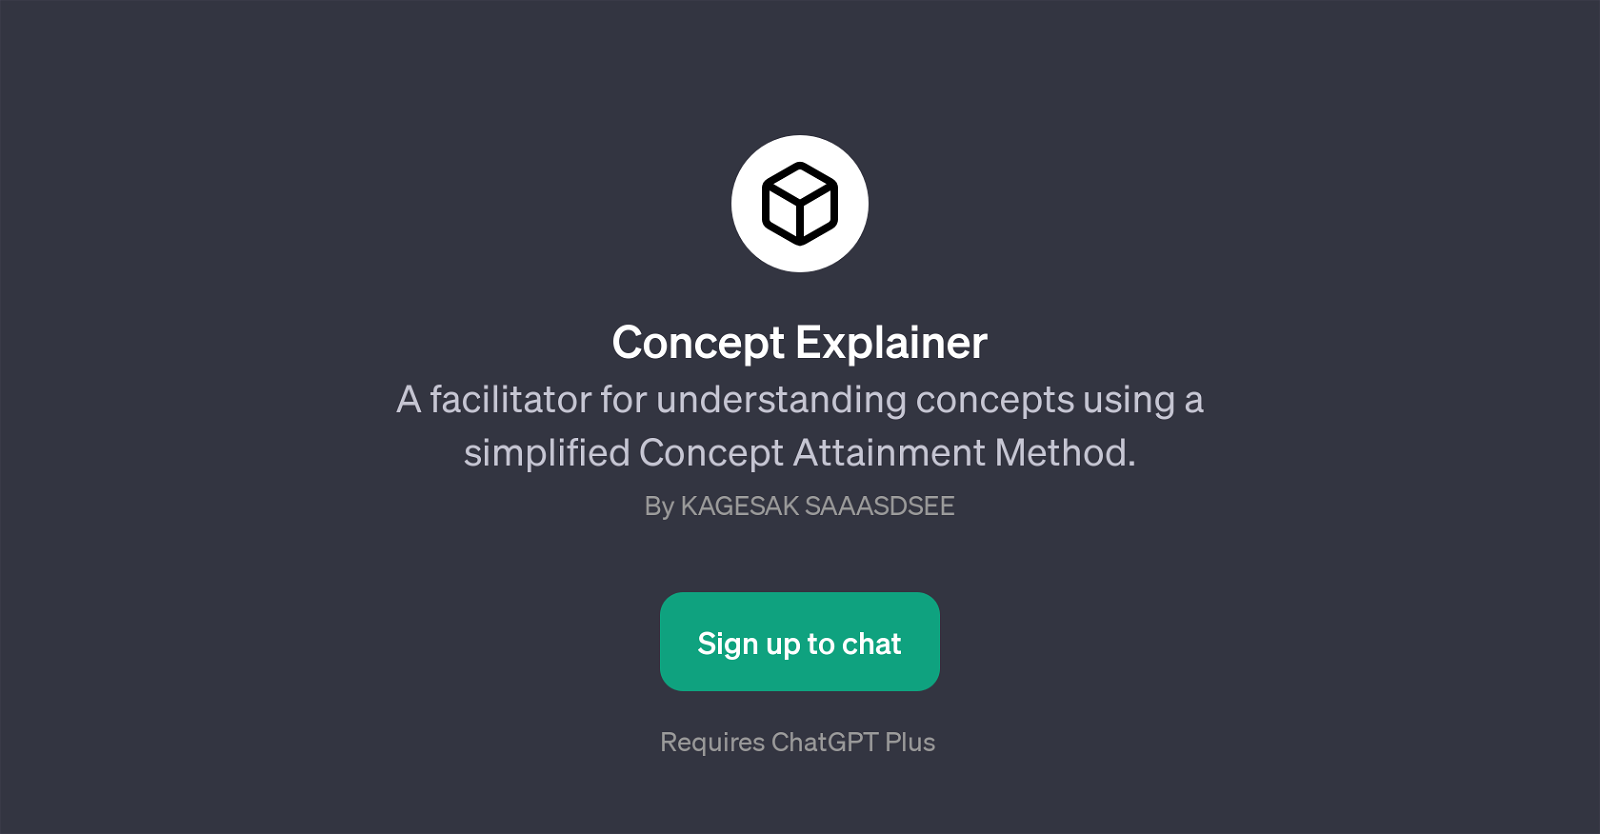 Concept Explainer website